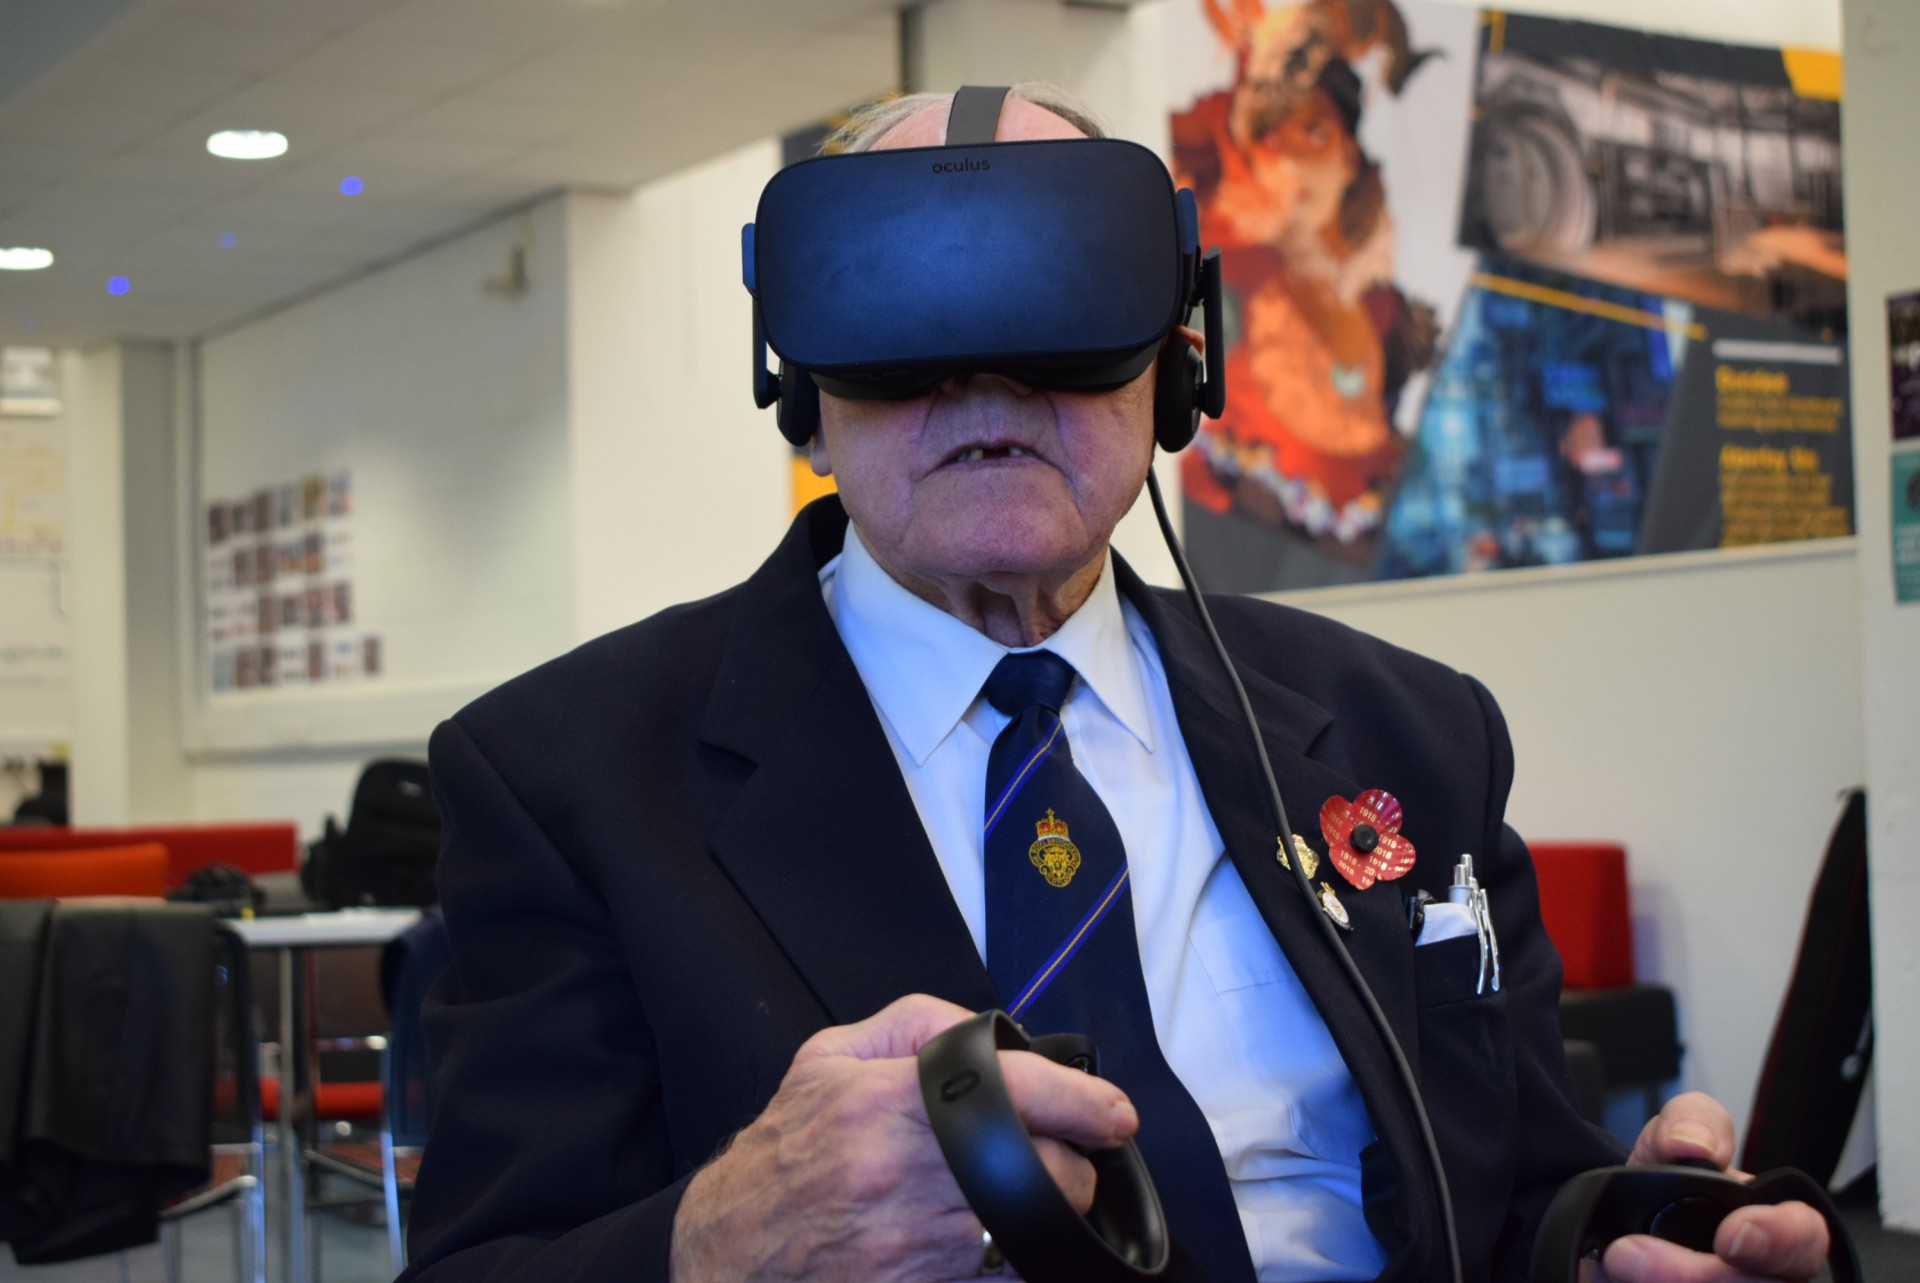 Veterans' memories spark innovative virtual reality project